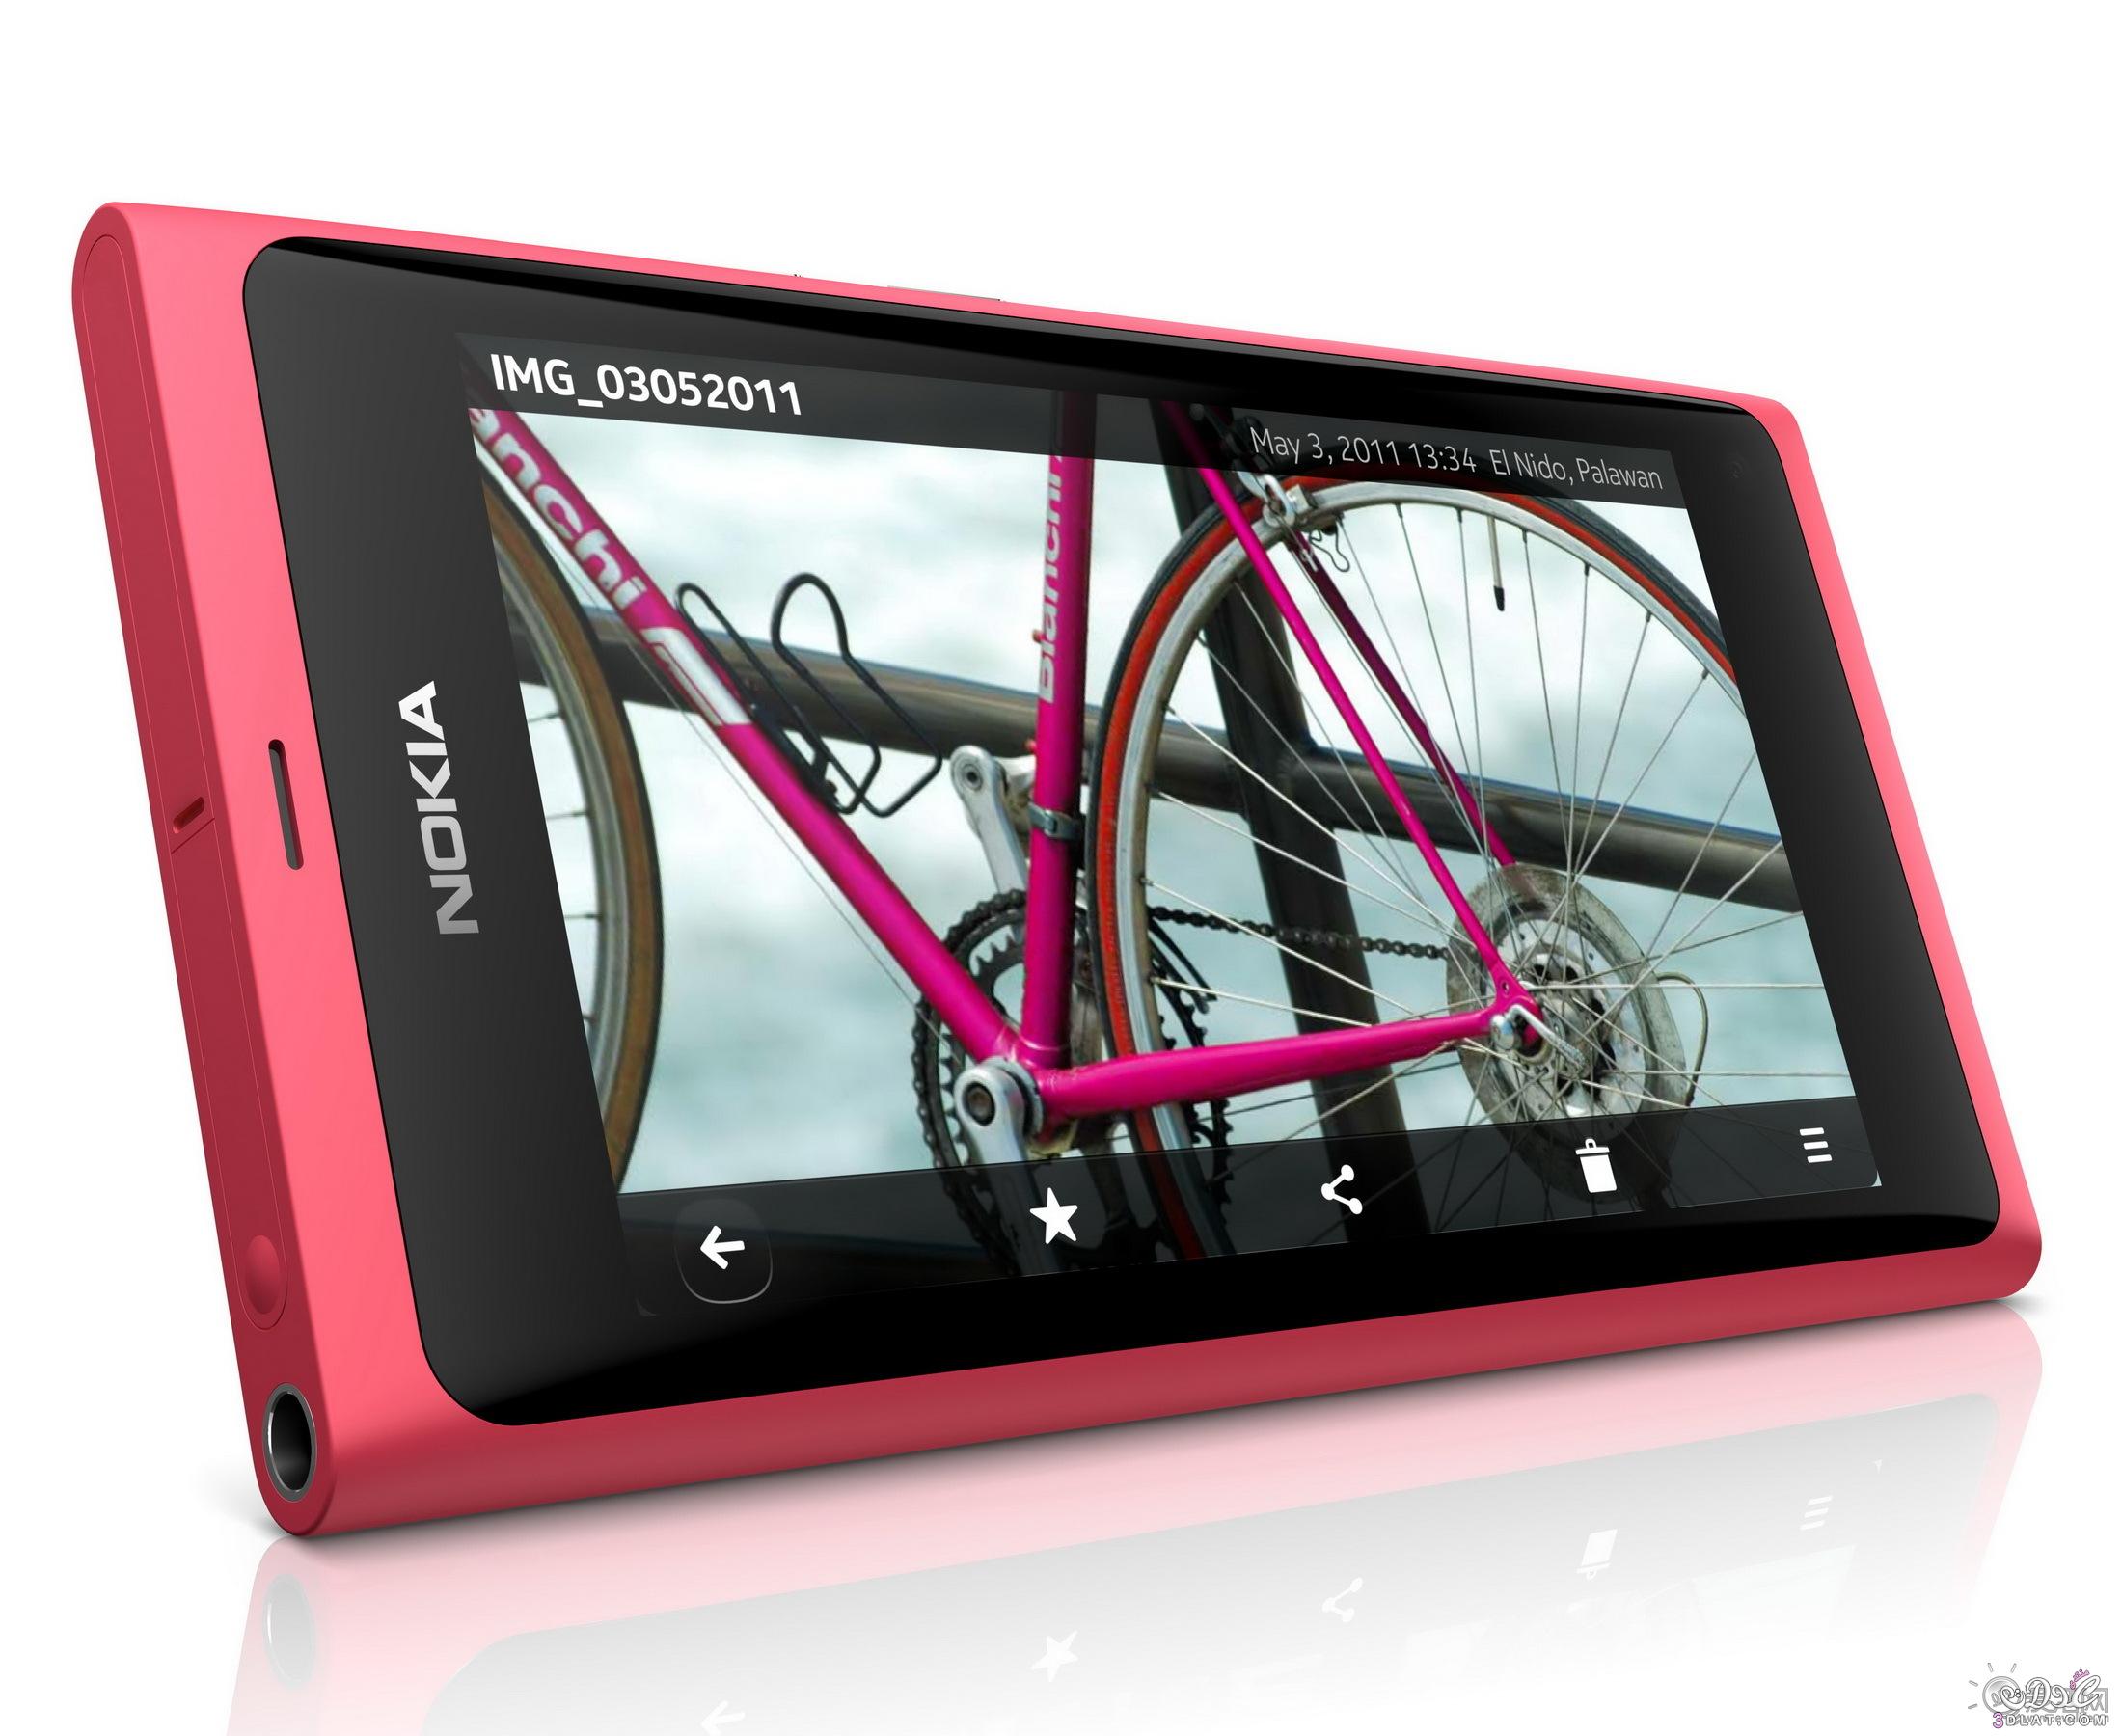 موبايل  : موبايل Nokia N9 و صورة للموبايل n9 مثلا N10